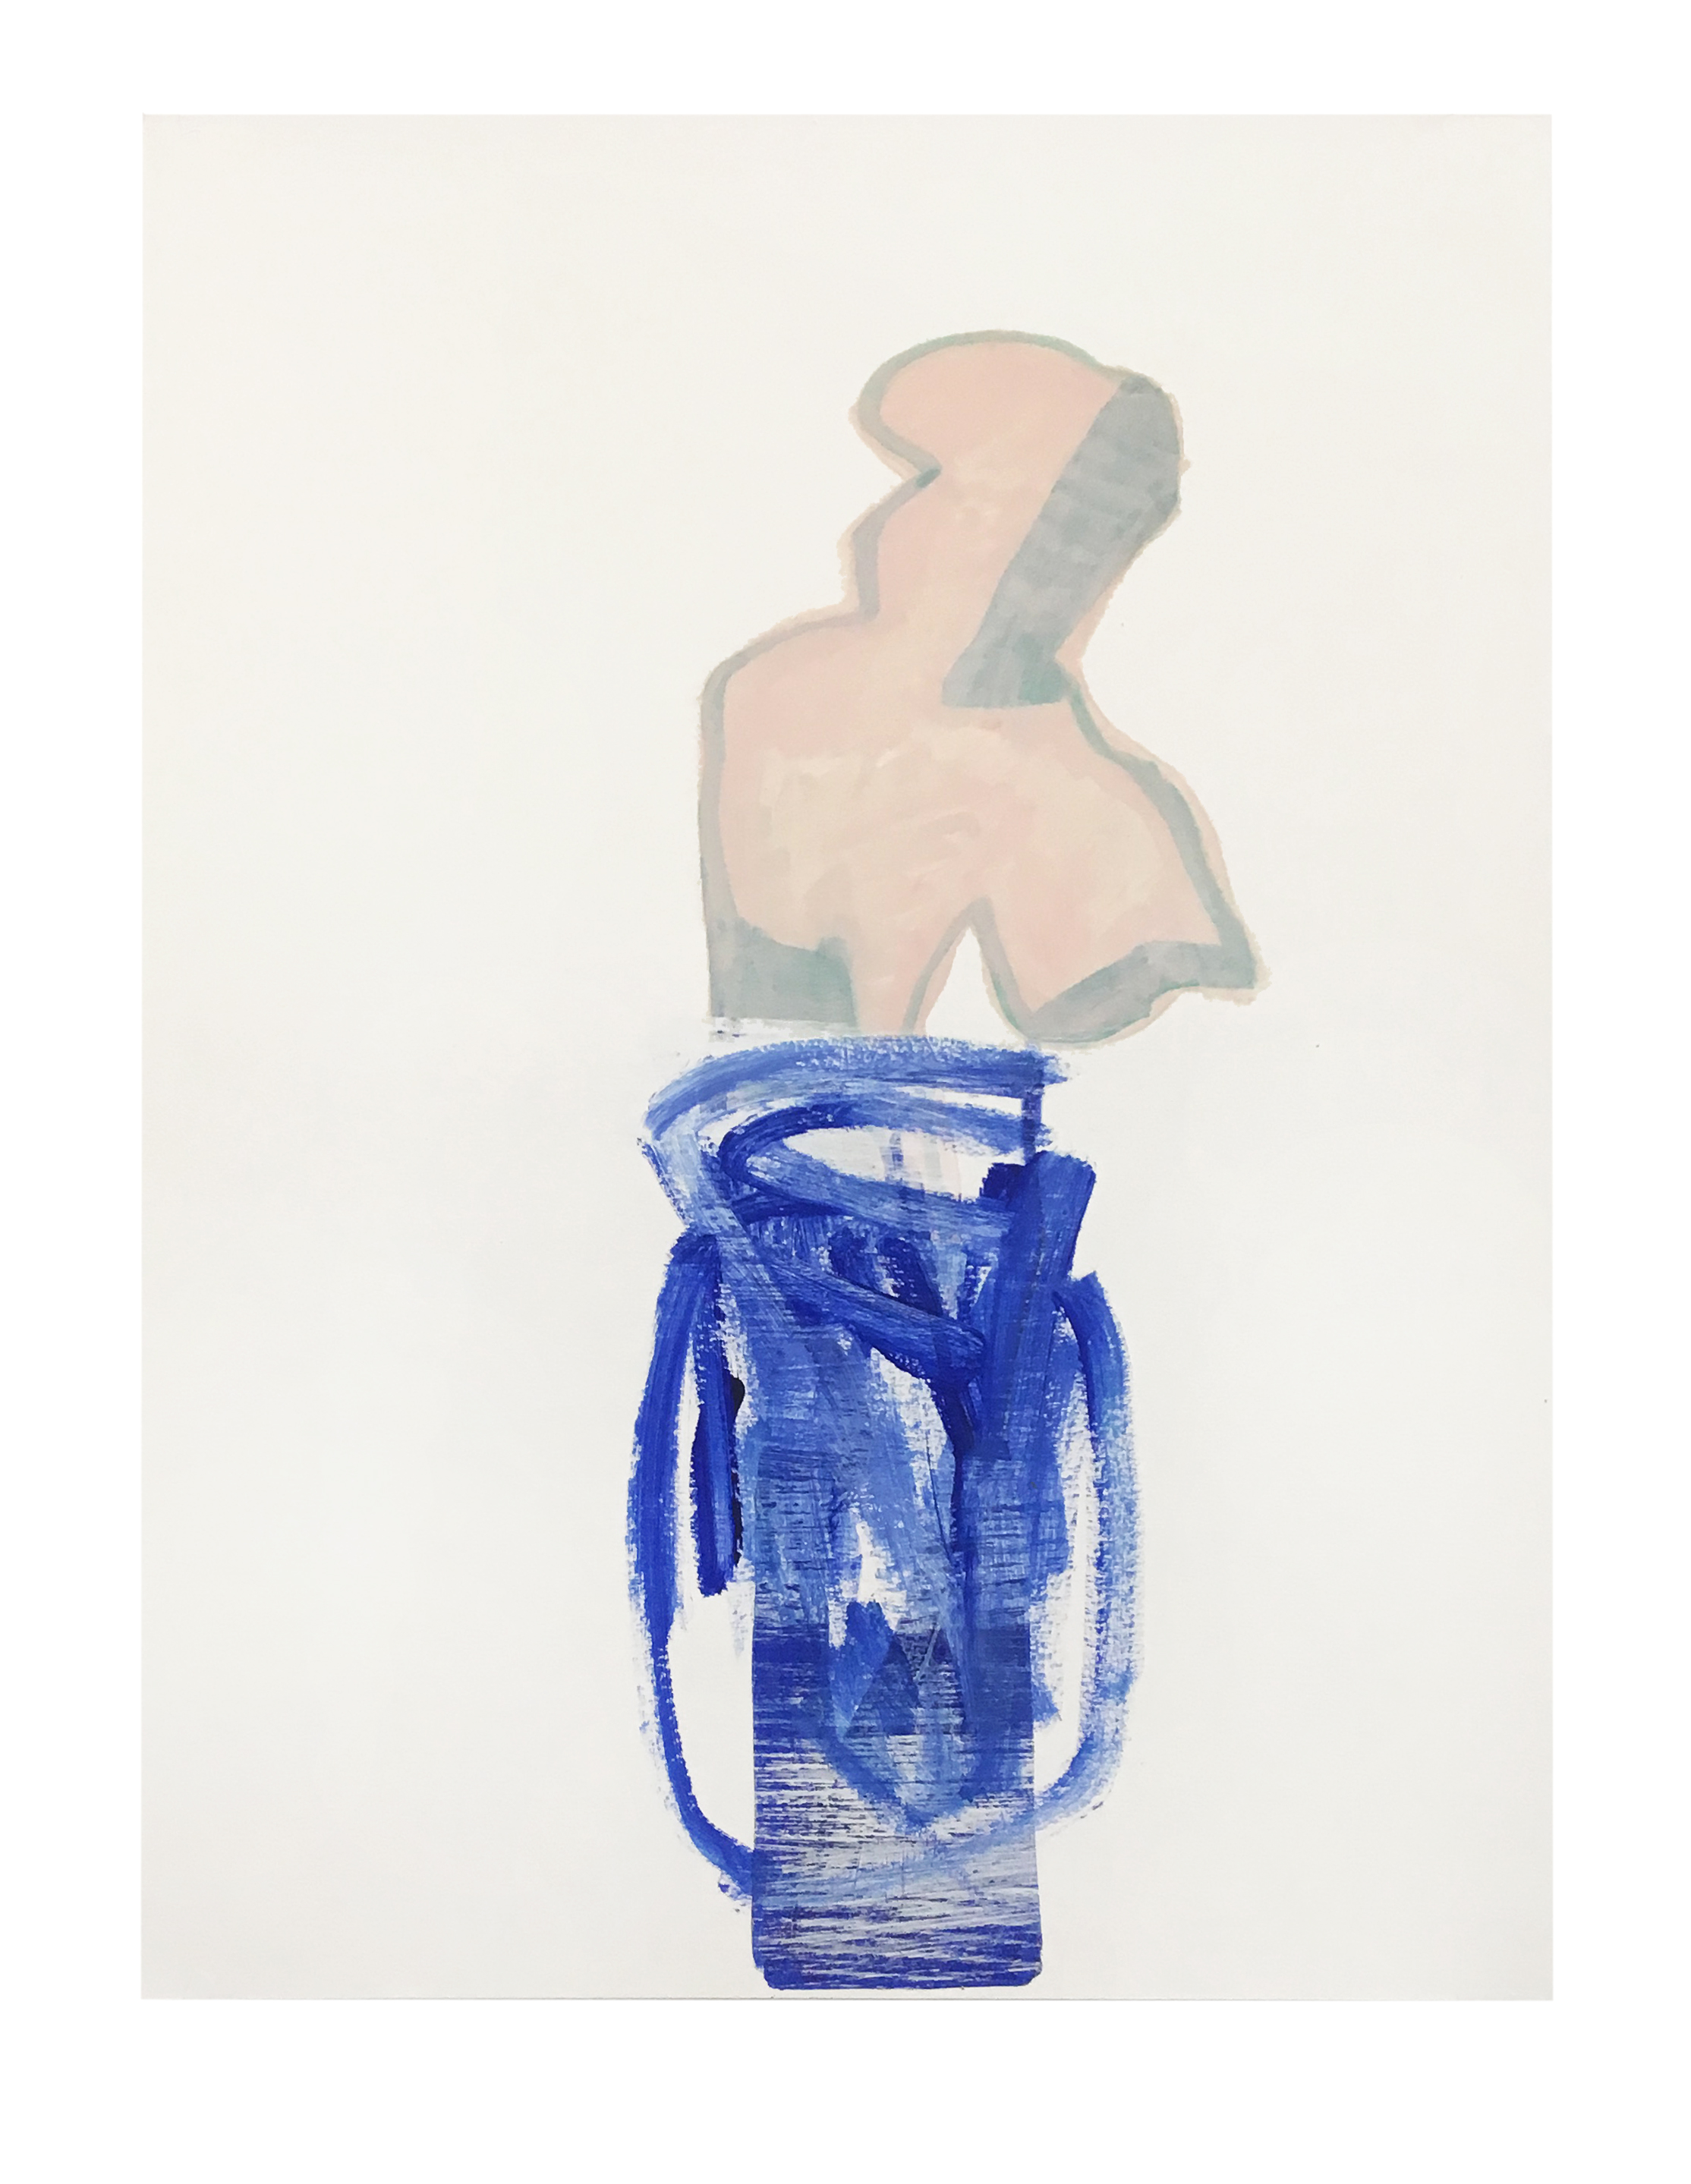 Sofia Quirno, Genie, 2014, acrylic on paper, 24 x 18 inch.JPG